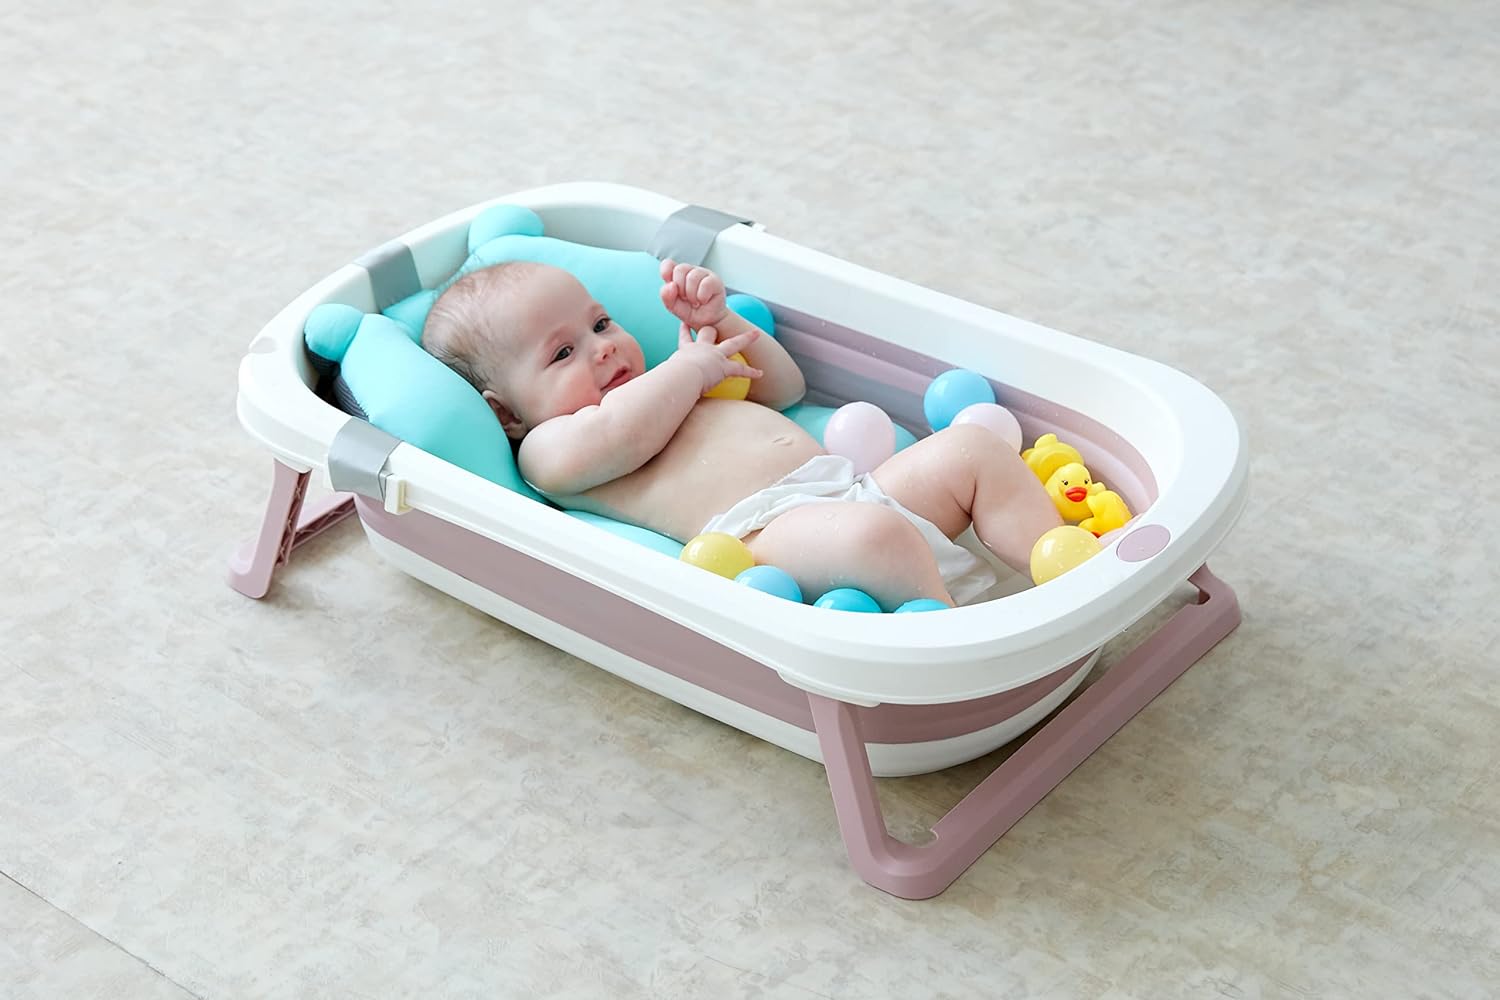 Review: Foldable Bath Tub for Newborns